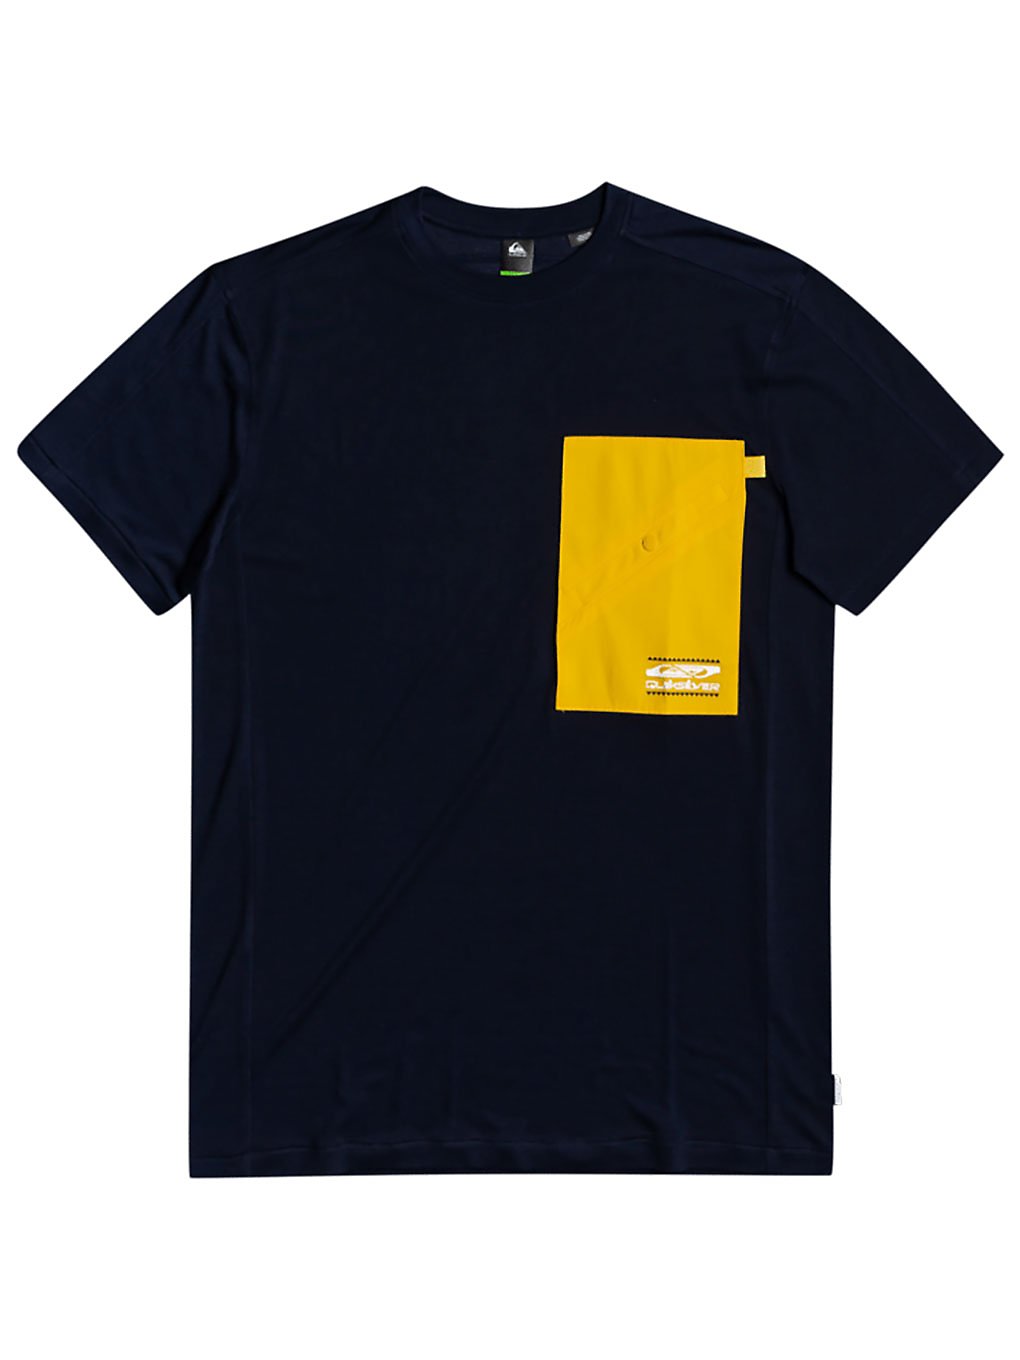 Quiksilver Dry Valley T-Shirt navy blazer